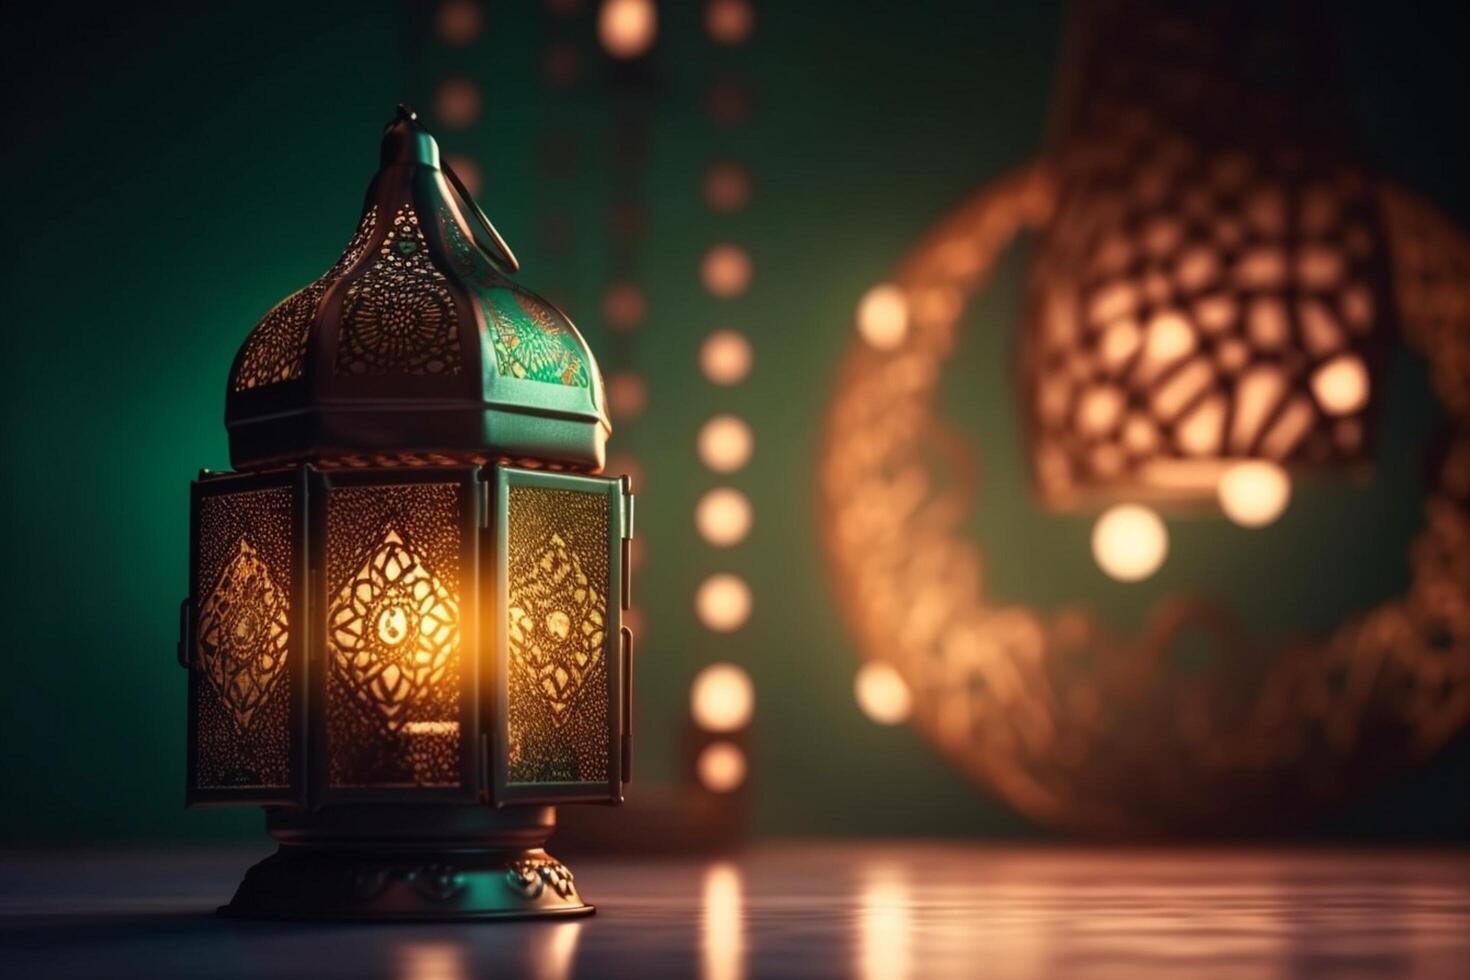 Happy Eid Mubarak Wishes Ramadan Mubarak in Arabic and Urdu Eid Images for Muslim photo